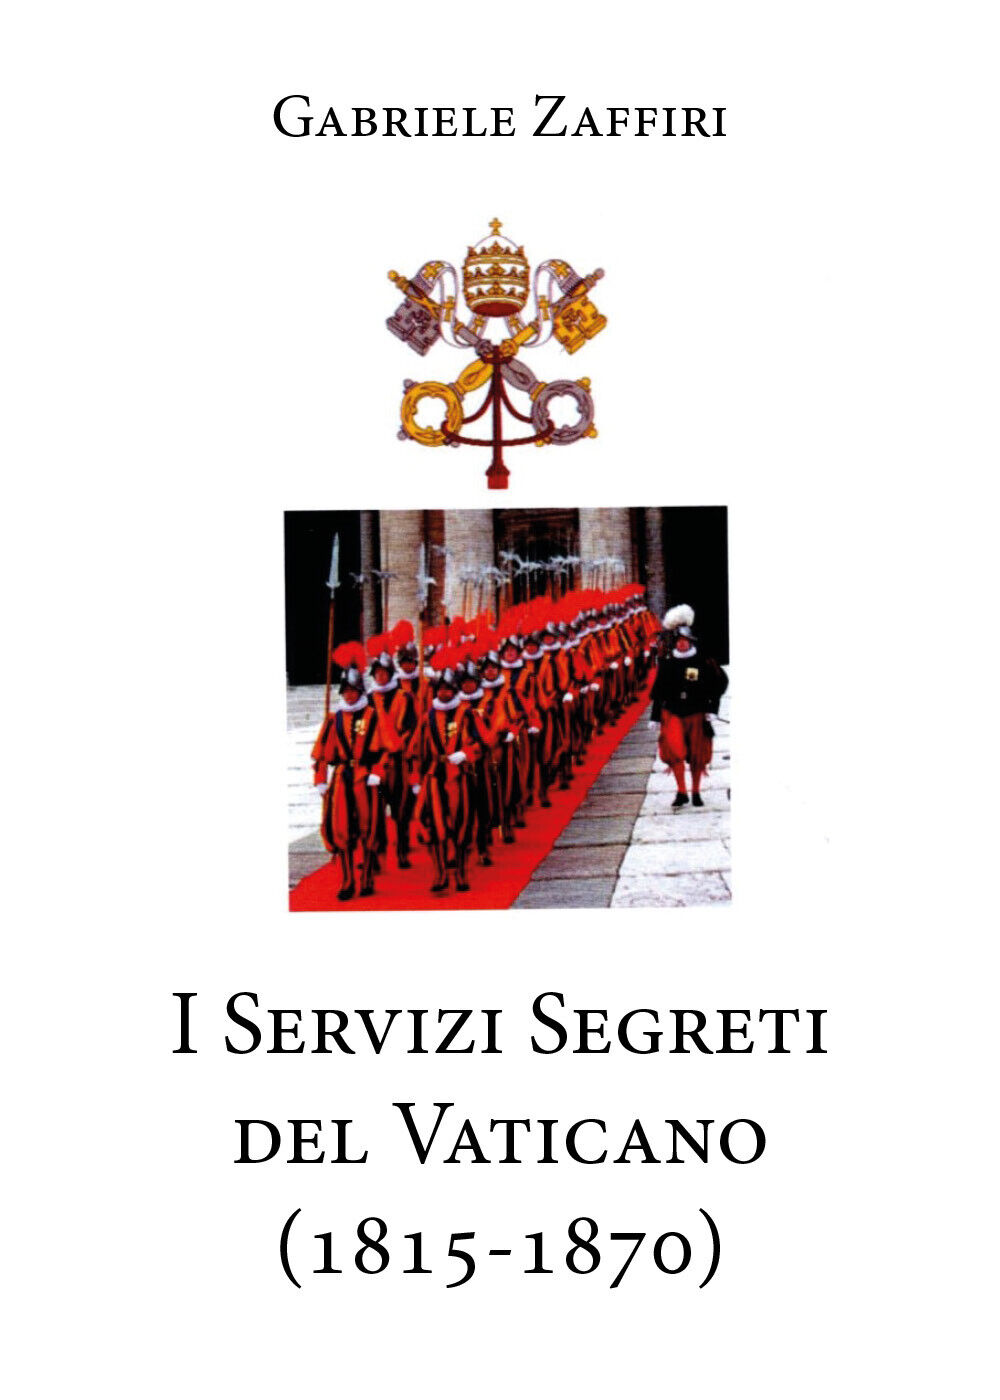 I servizi segreti del Vaticano (1815-1870) di Gabriele Zaffiri,  2020,  Youcanpr